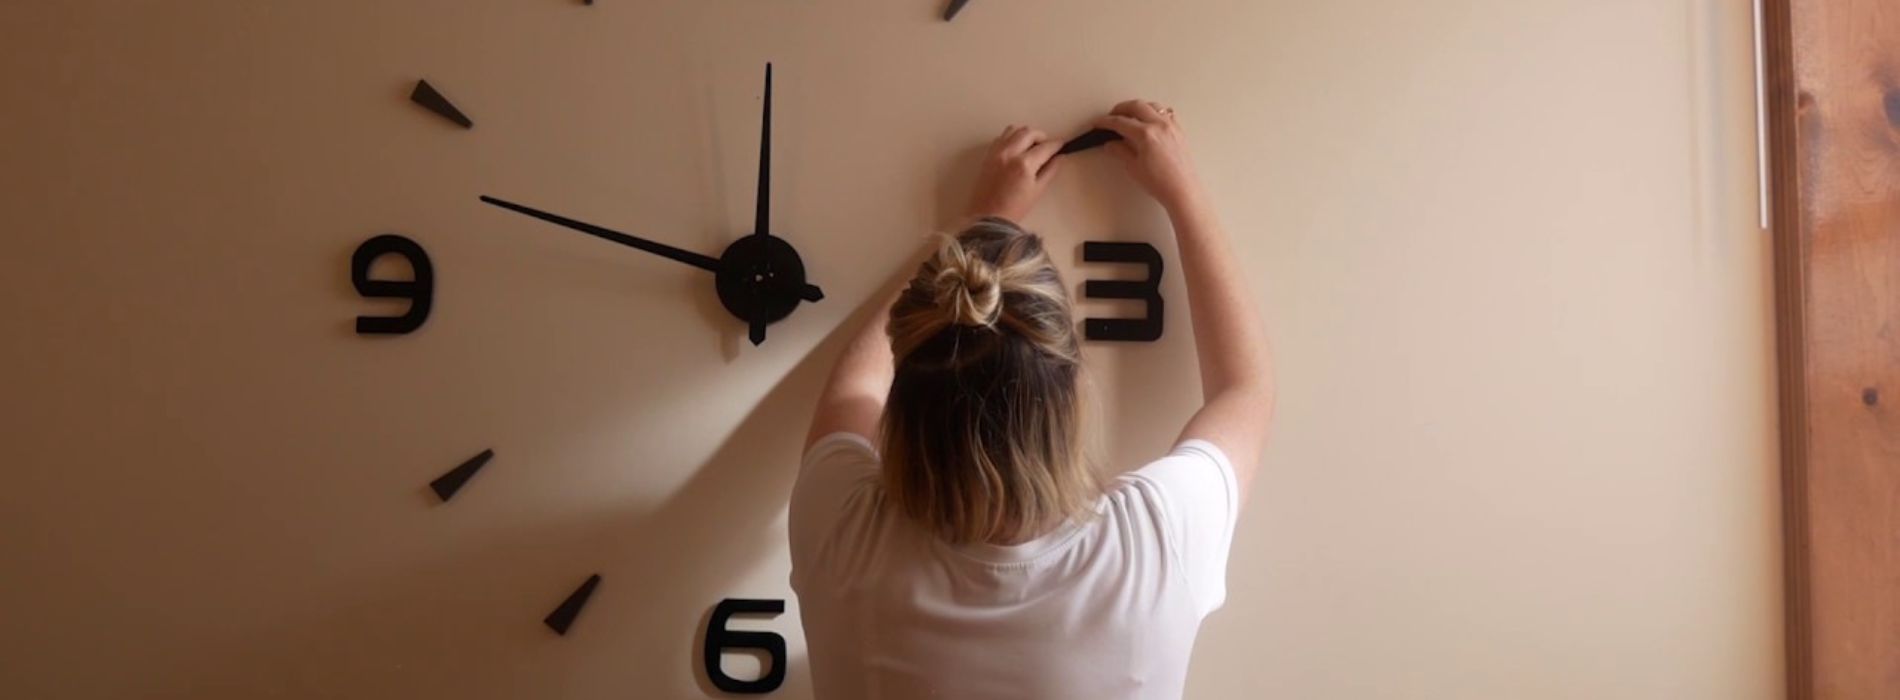 Comment accrocher une horloge murale